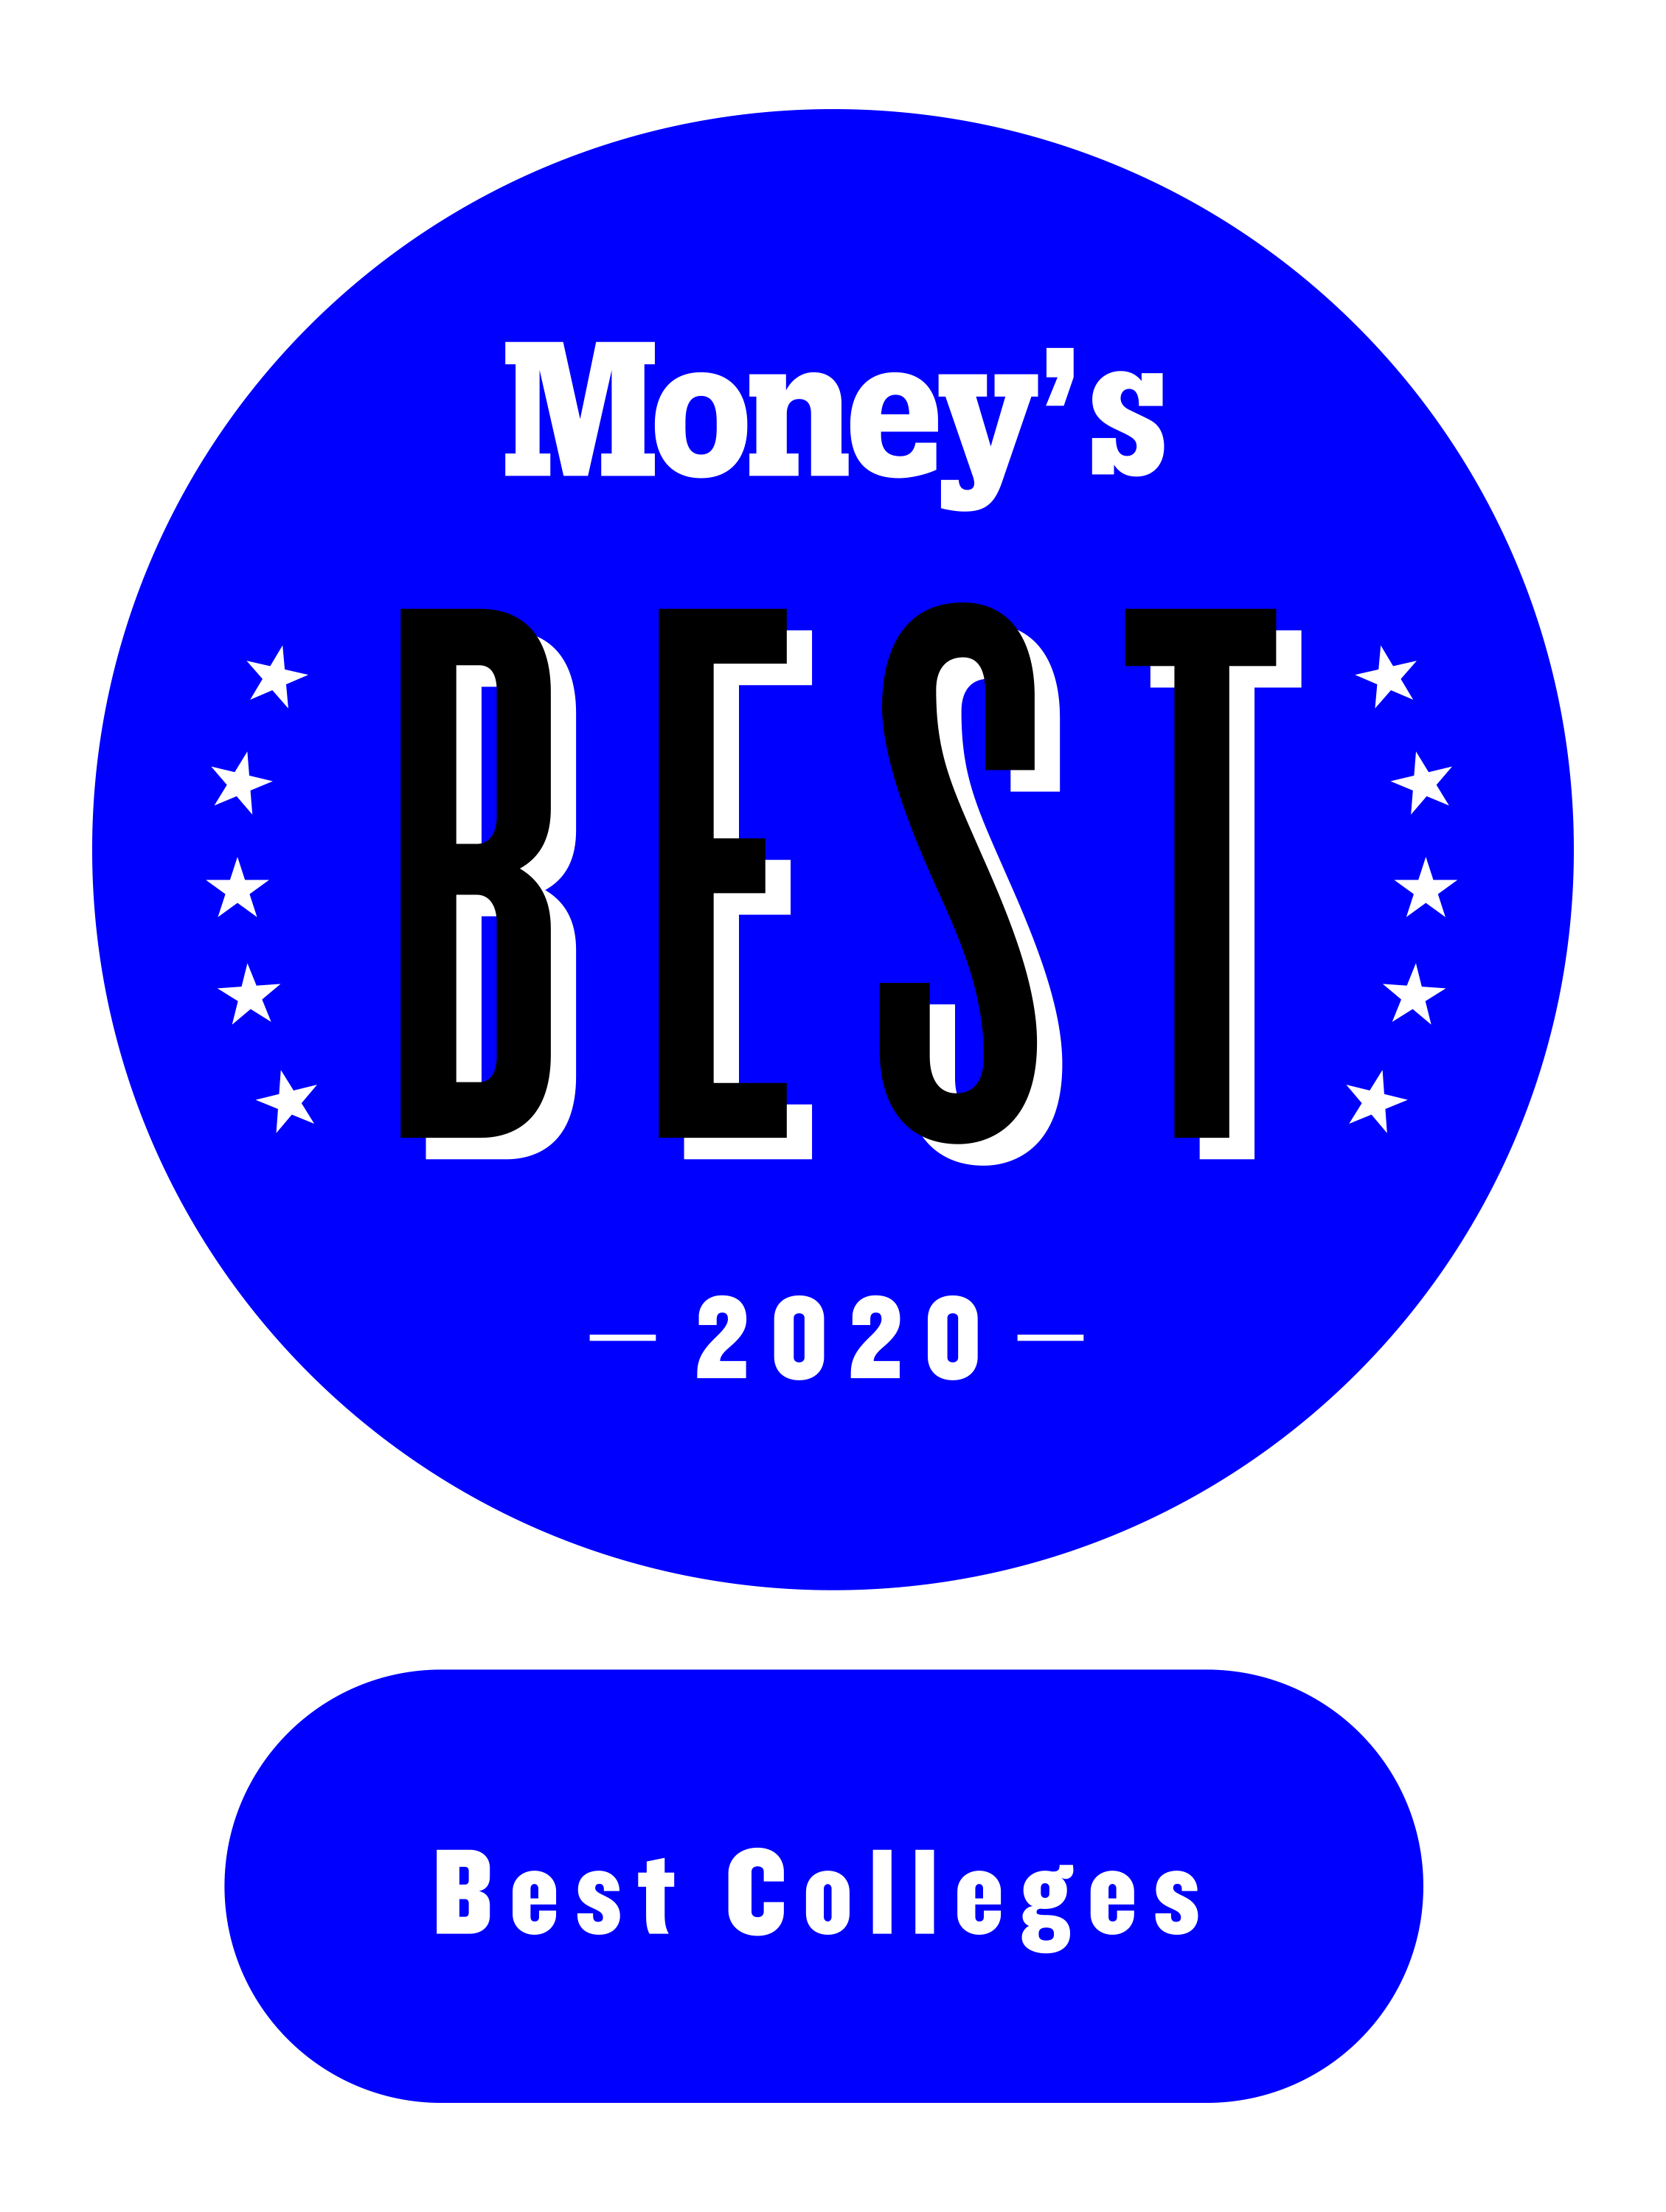 Money's Best Colleges logo